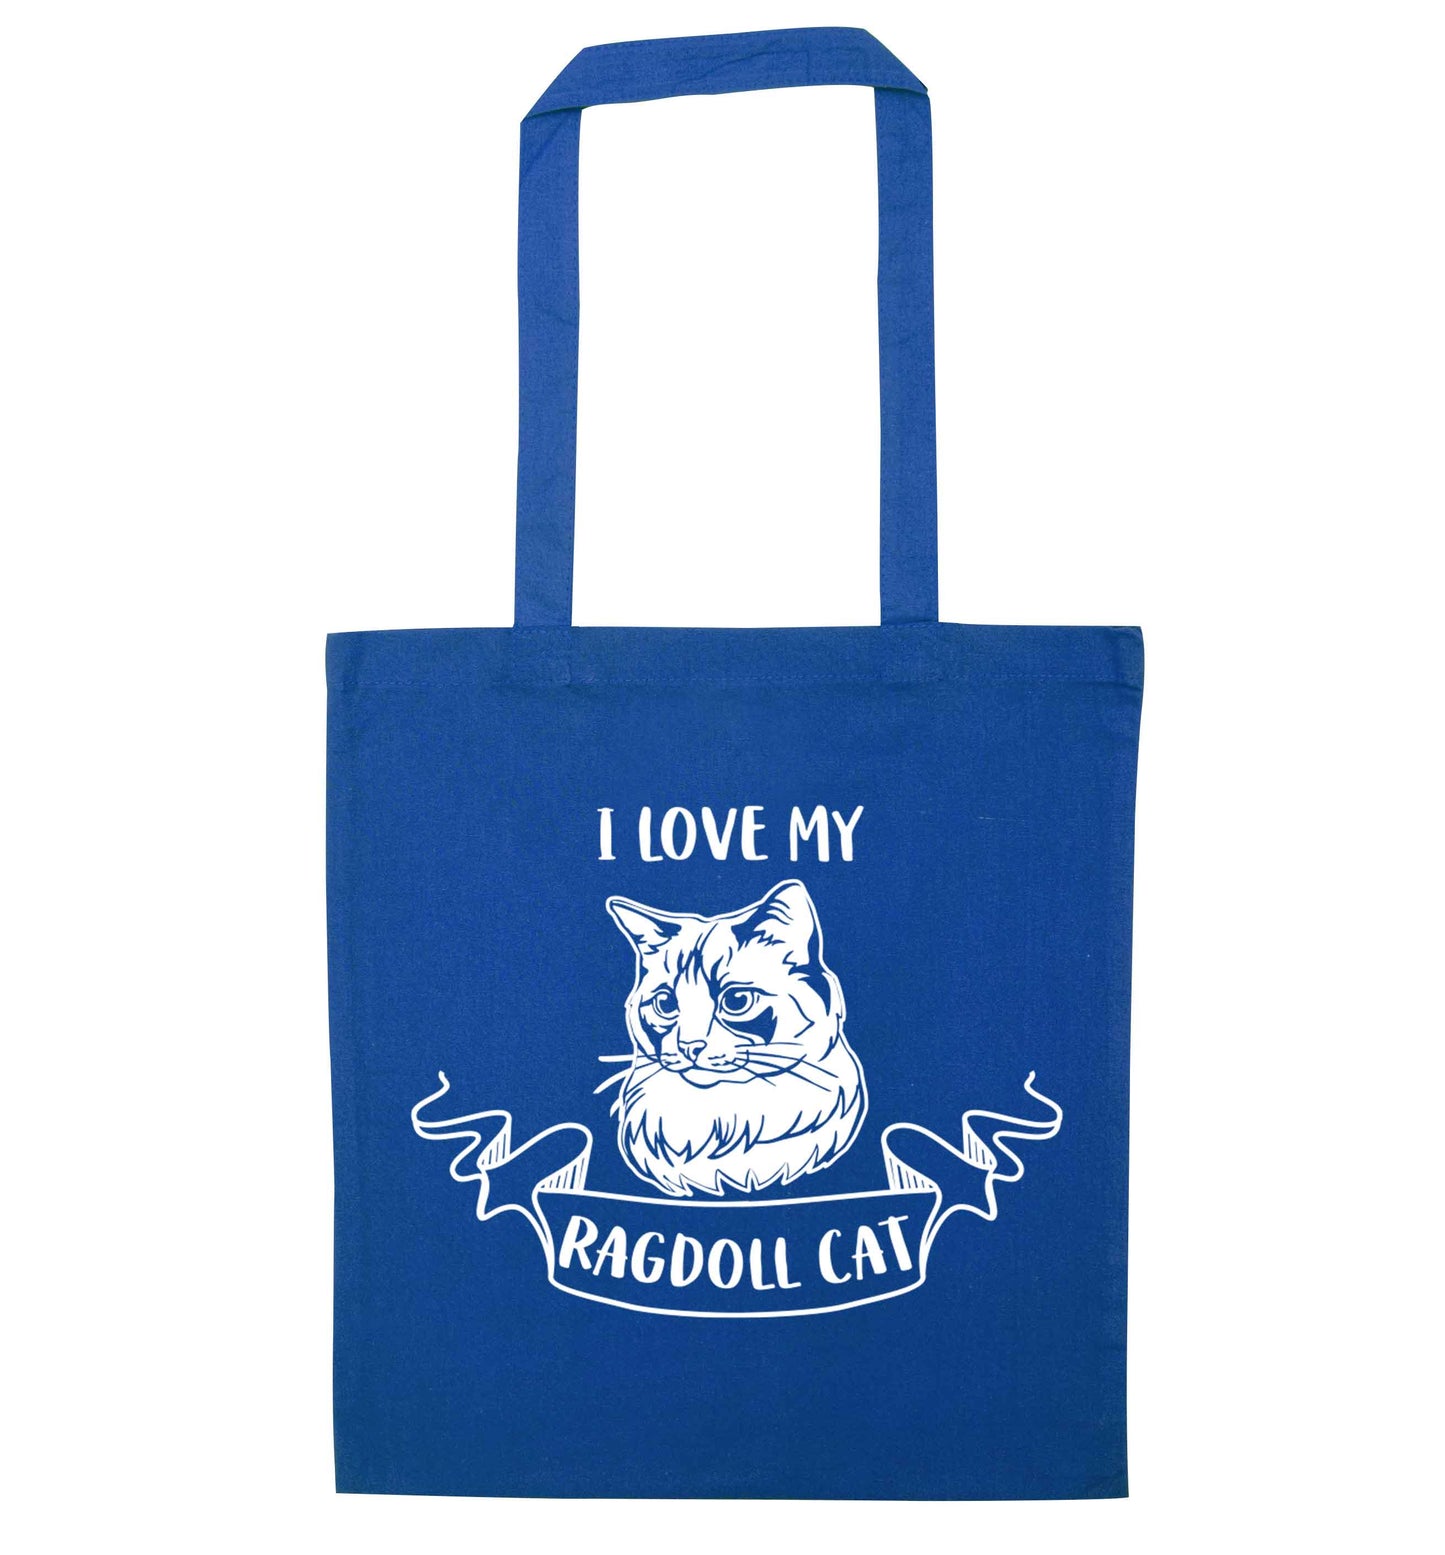 I love my ragdoll cat blue tote bag